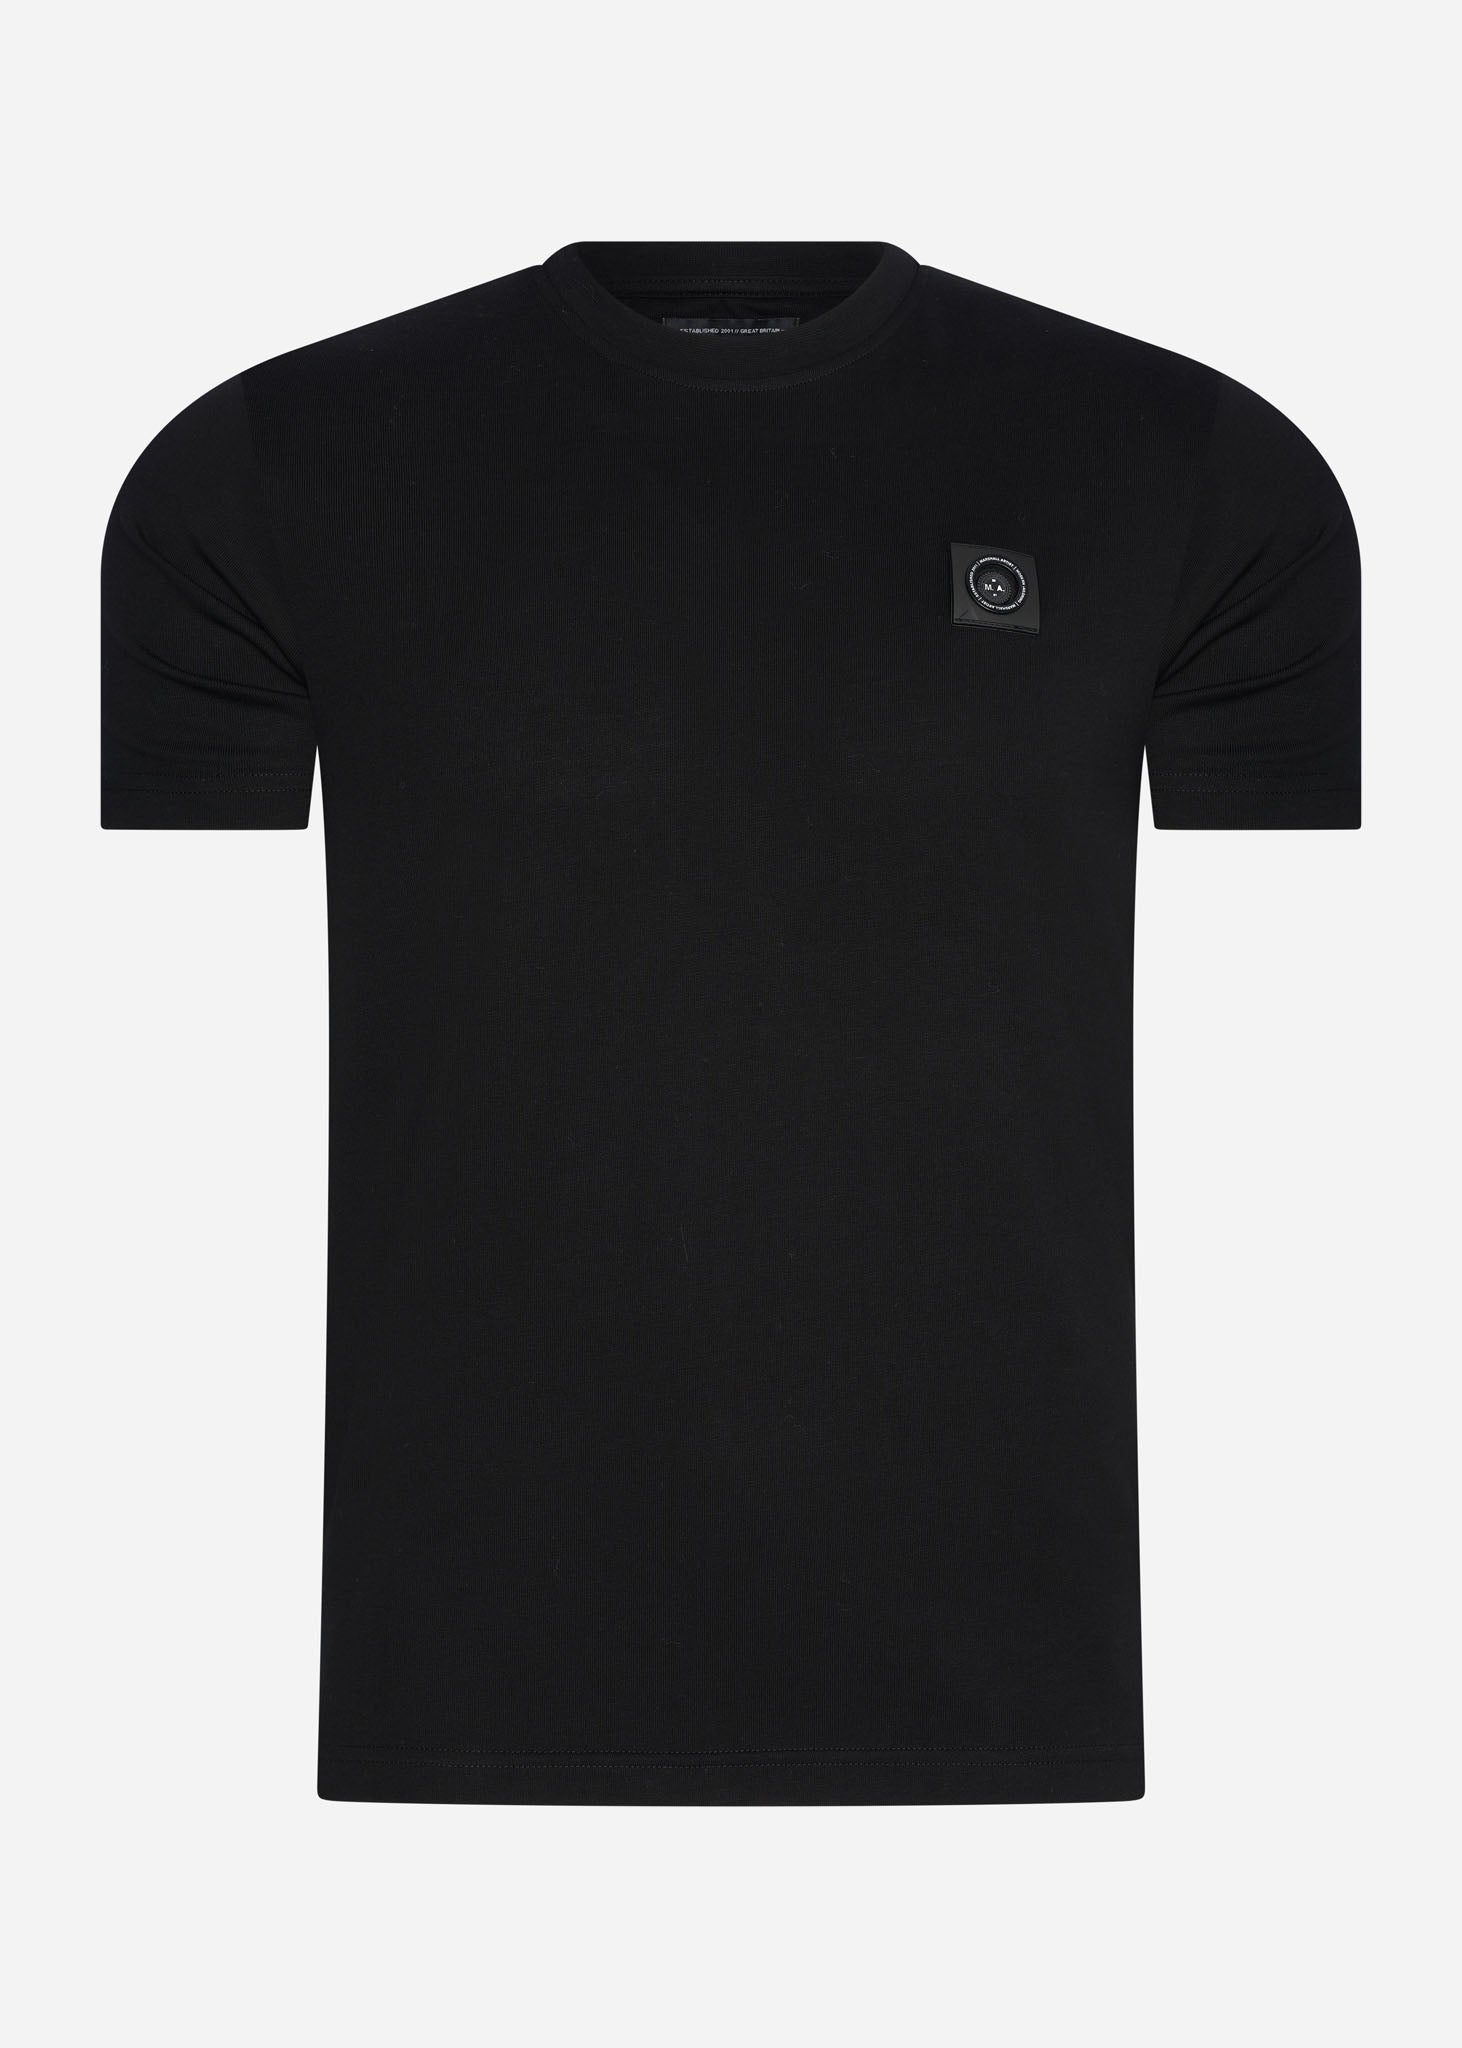 Marshall Artist T-shirts  Siren t-shirt - black 